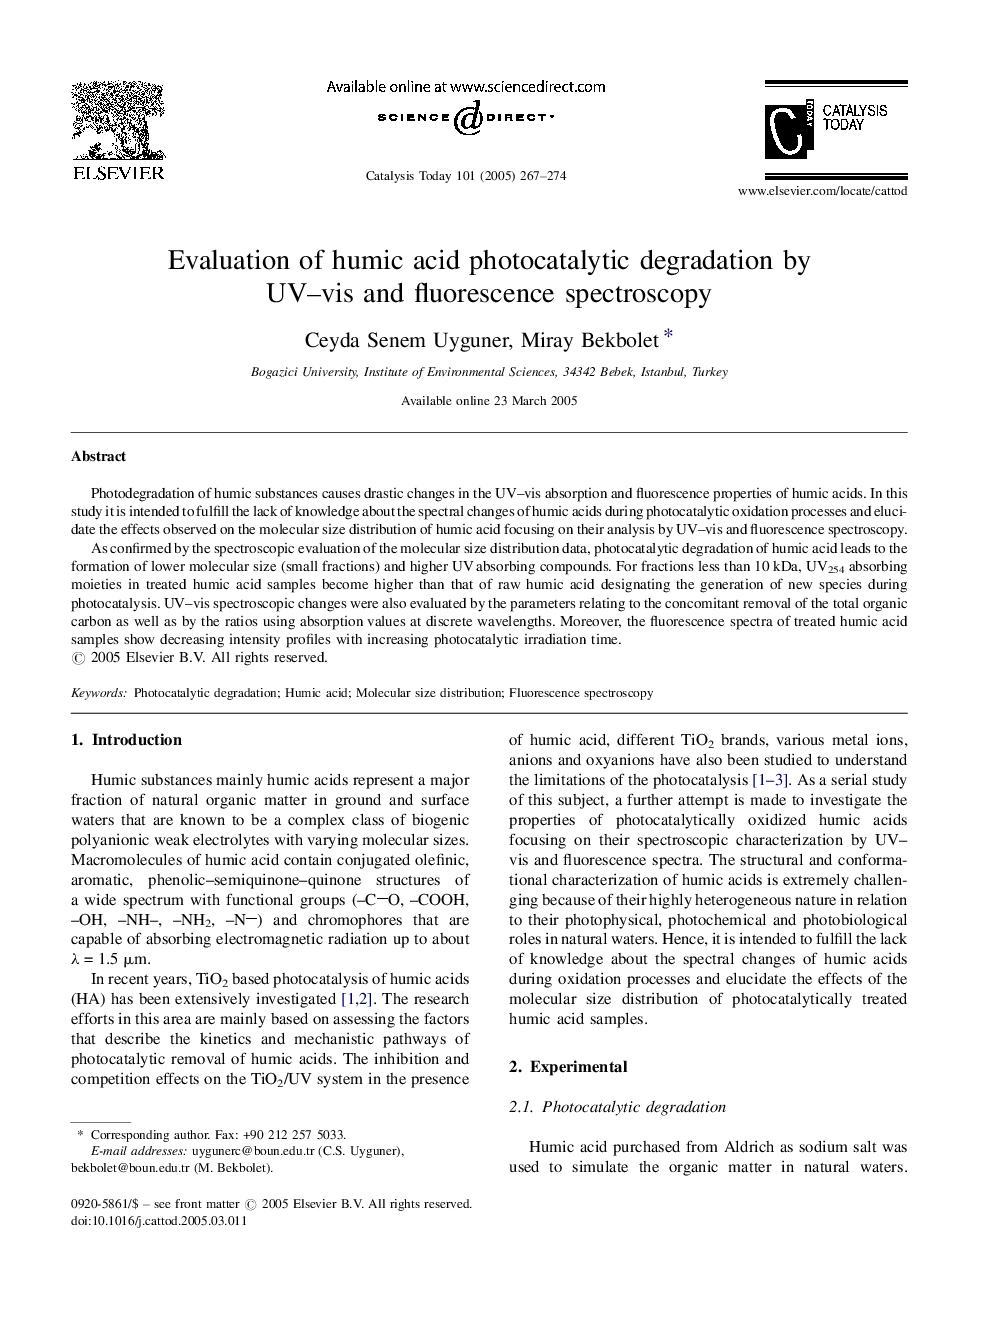 Evaluation of humic acid photocatalytic degradation by UV-vis and fluorescence spectroscopy